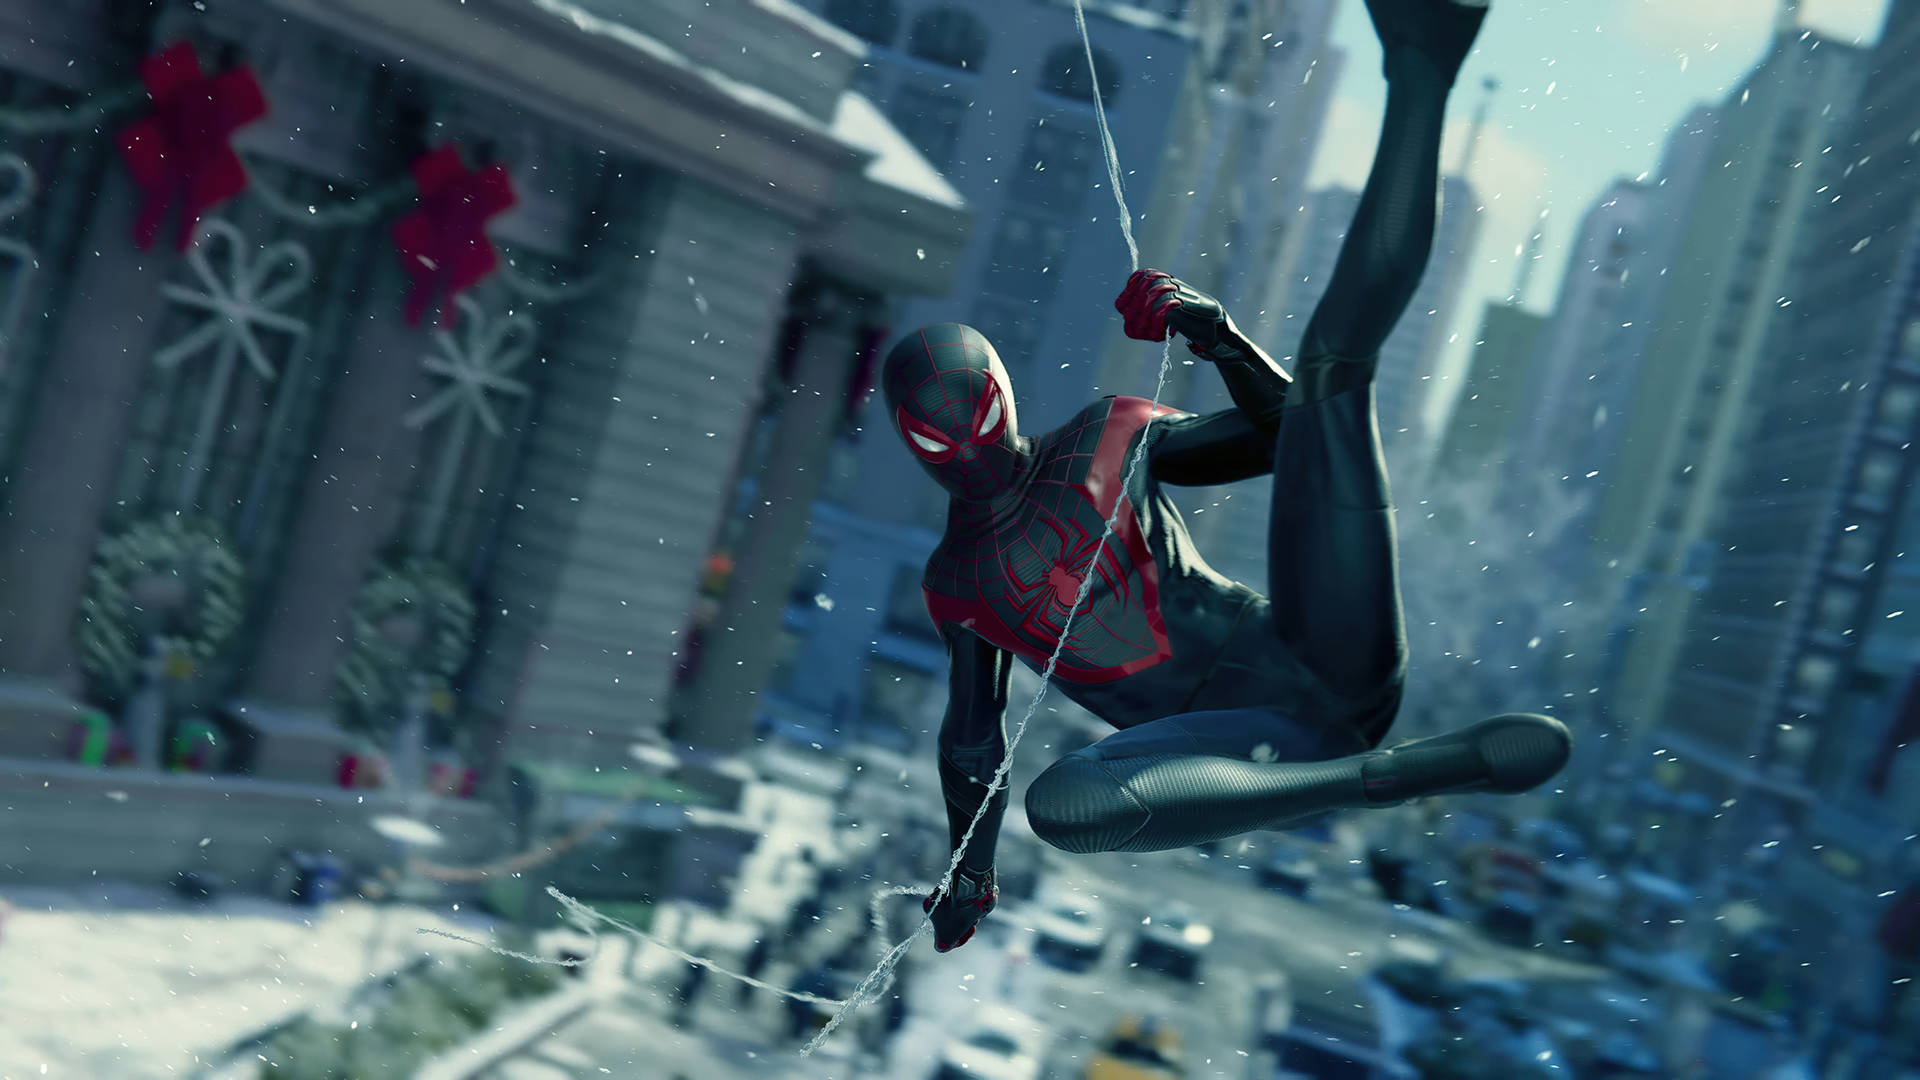 Black Spiderman Swinging In The City Wallpaper